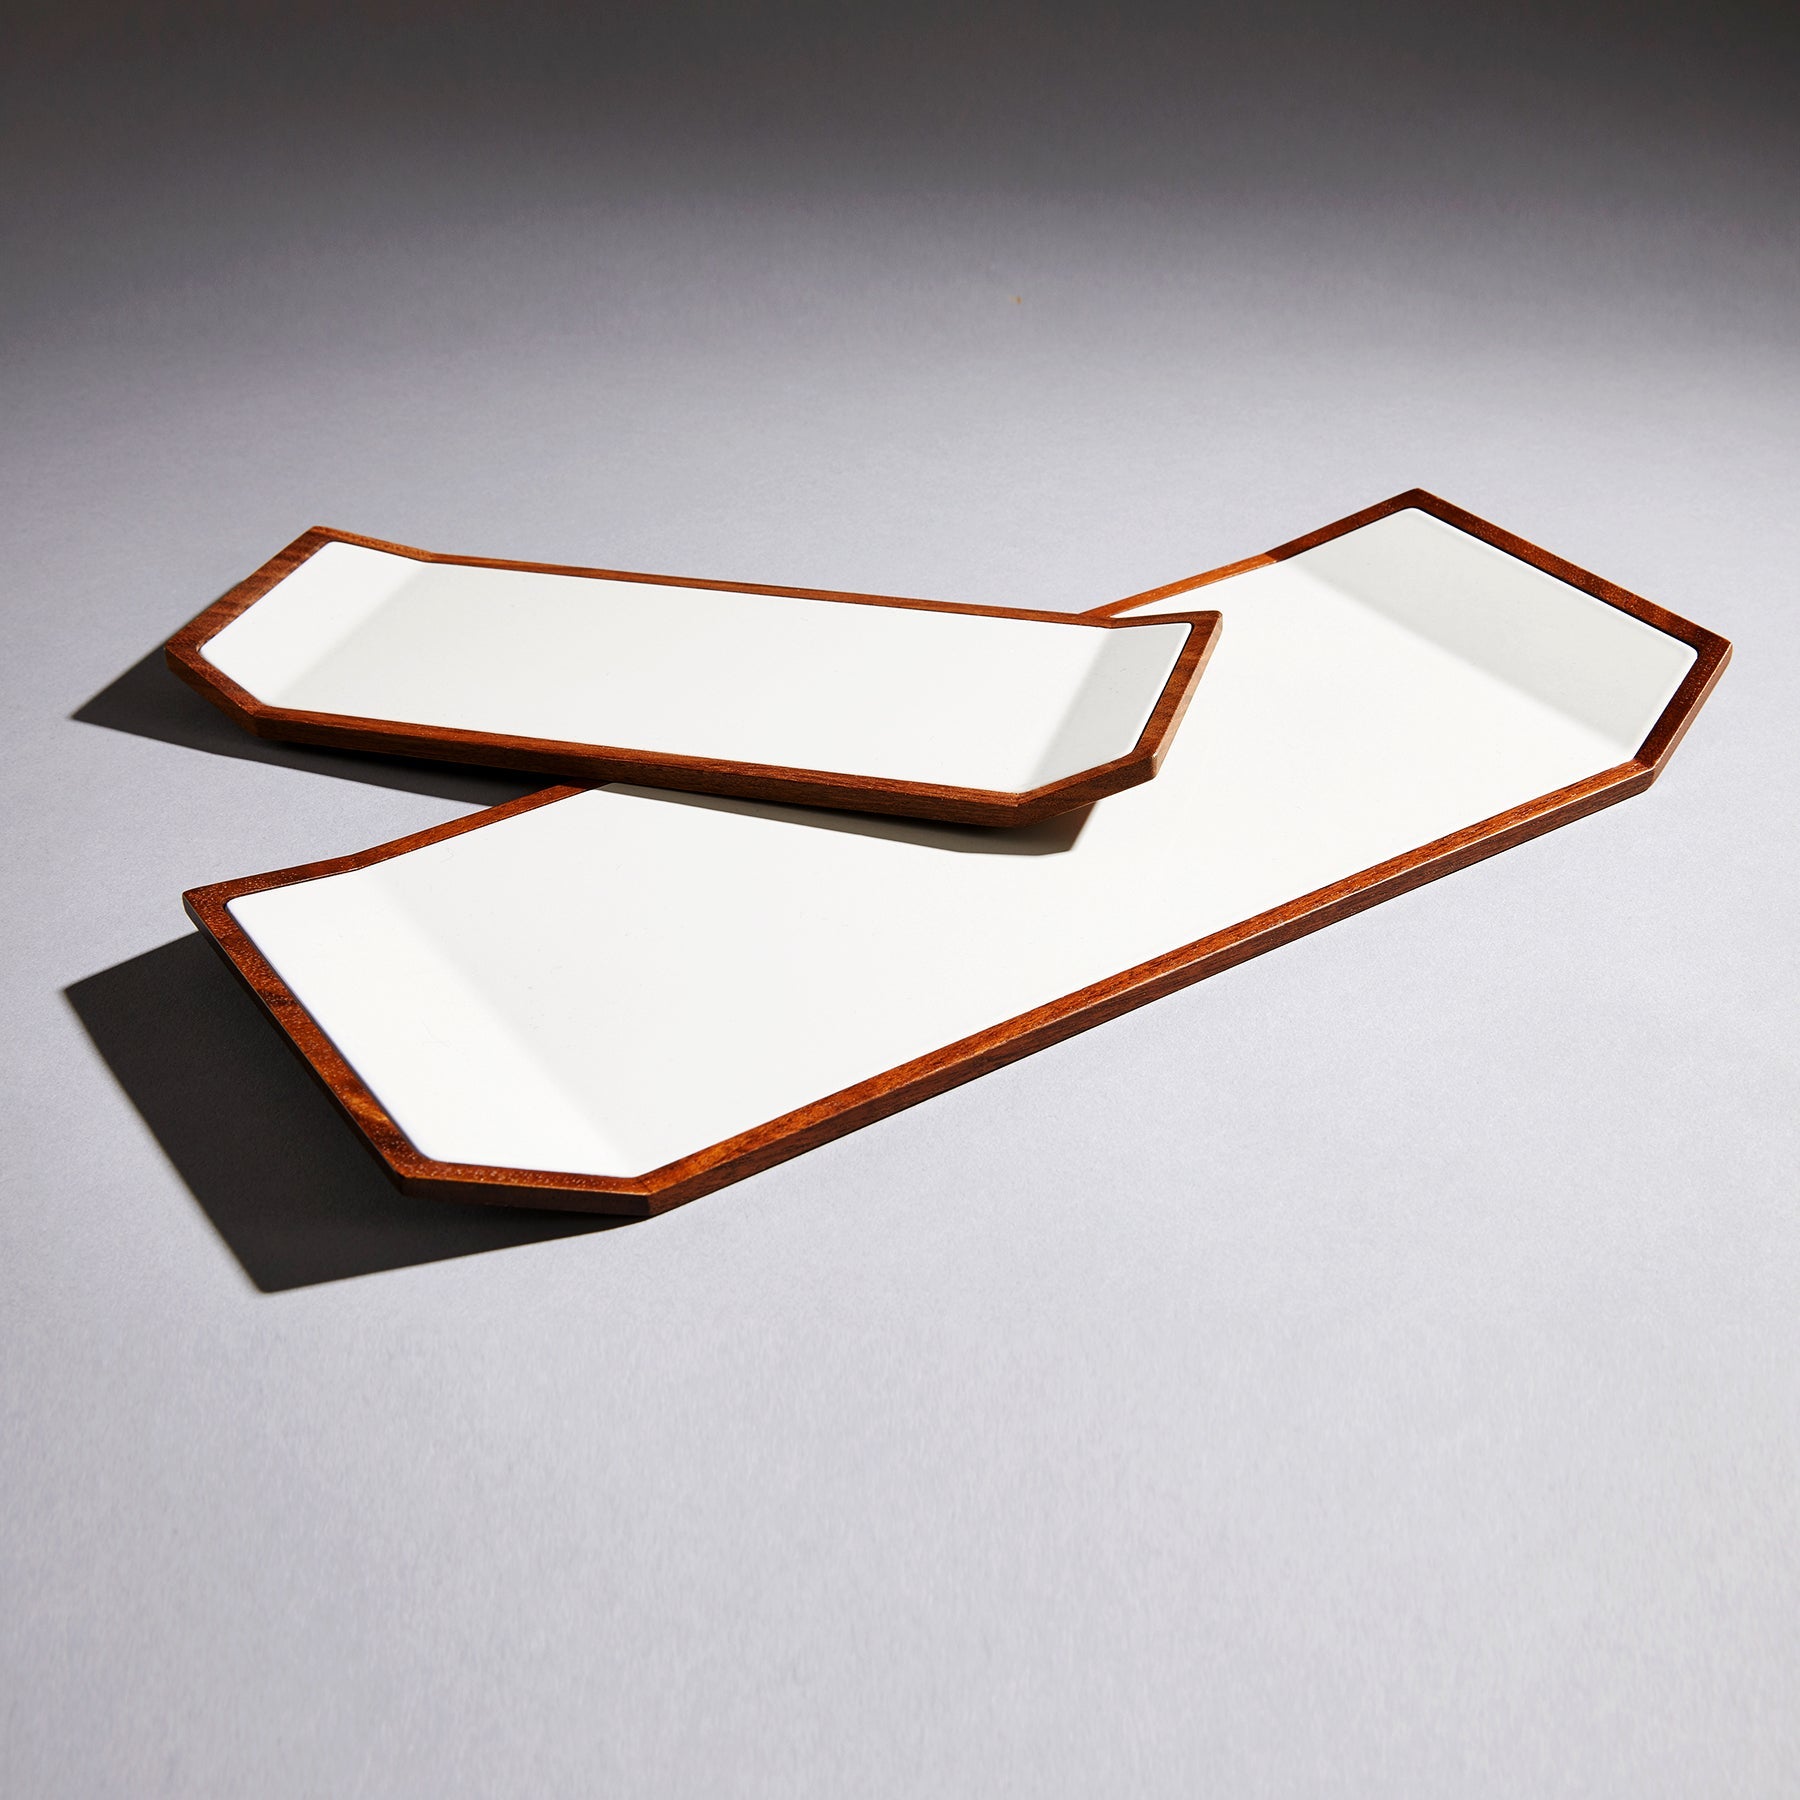 Zōgan Tray-Accent Product-Yoshiaki Ito Design